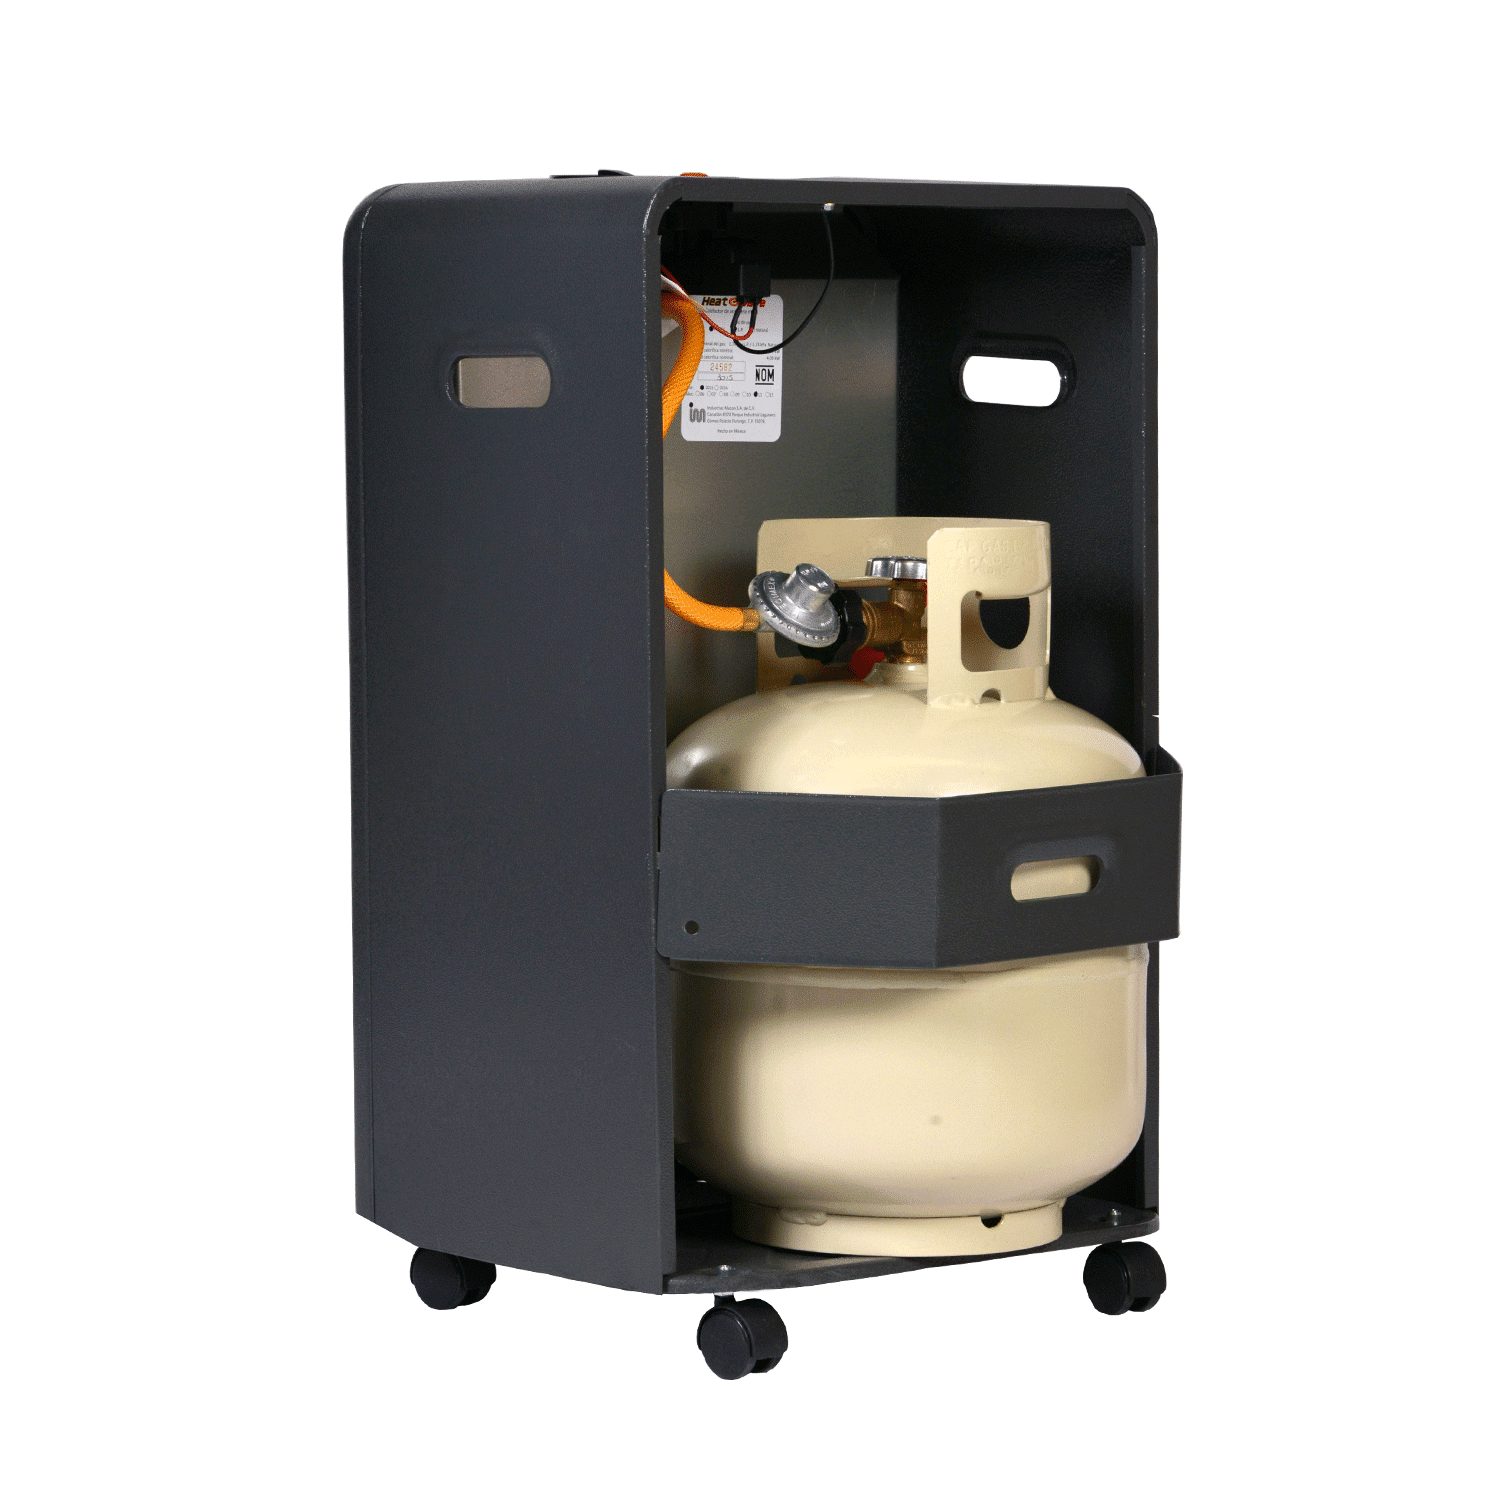 Calefactor de Baño  Heatwave modelo HF1500 LED - Heatwave